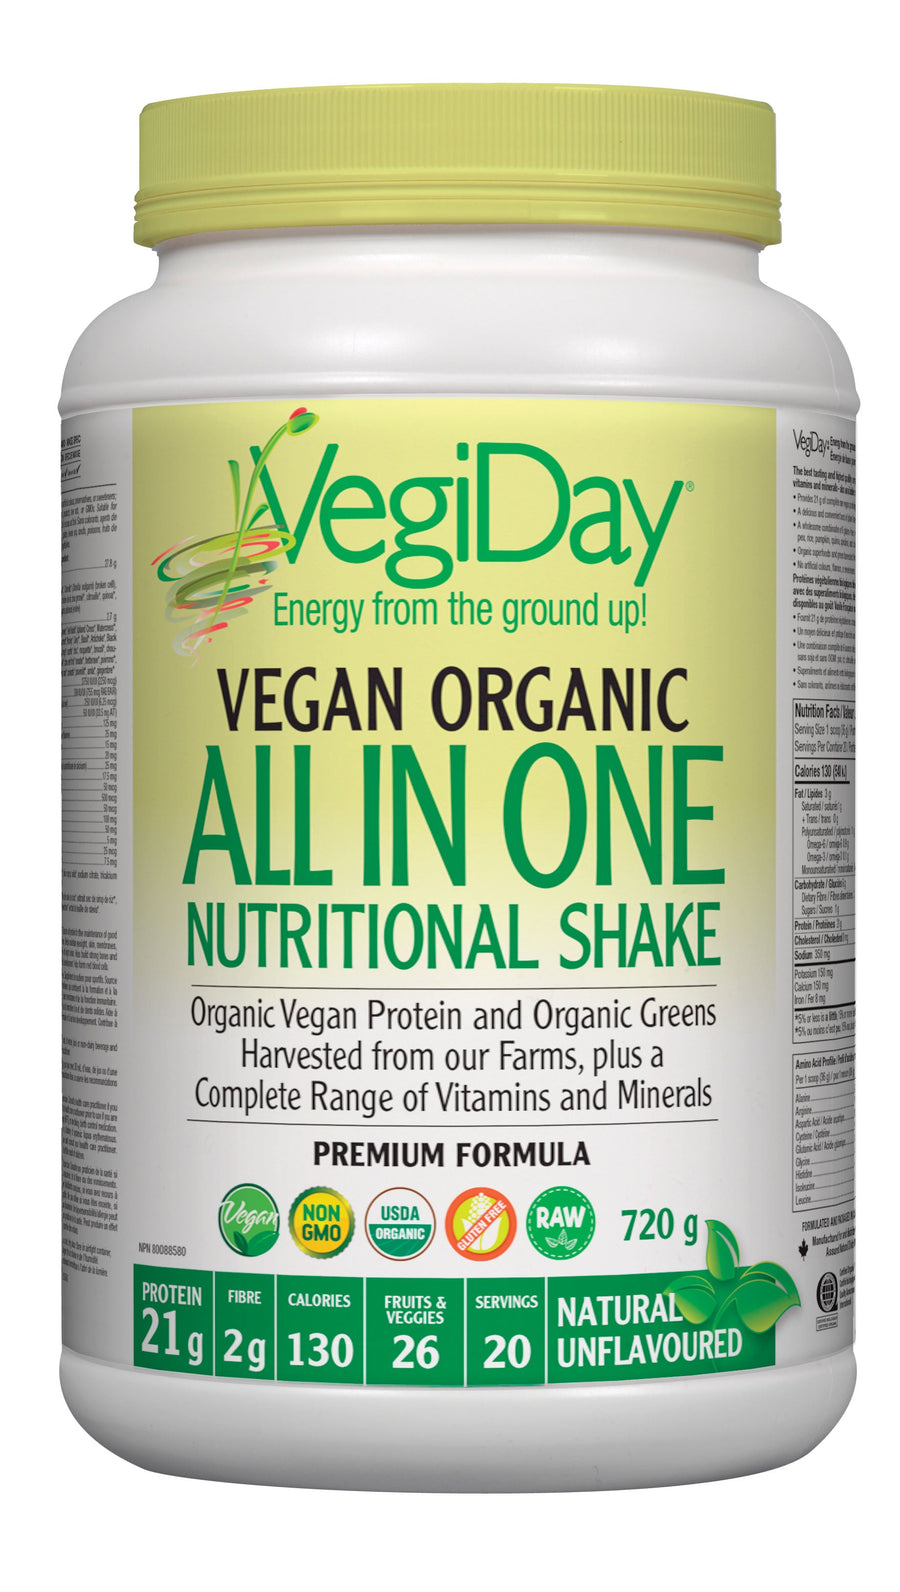 VegiDay Vegan Organic ALL IN ONE Nutritional Shake powder